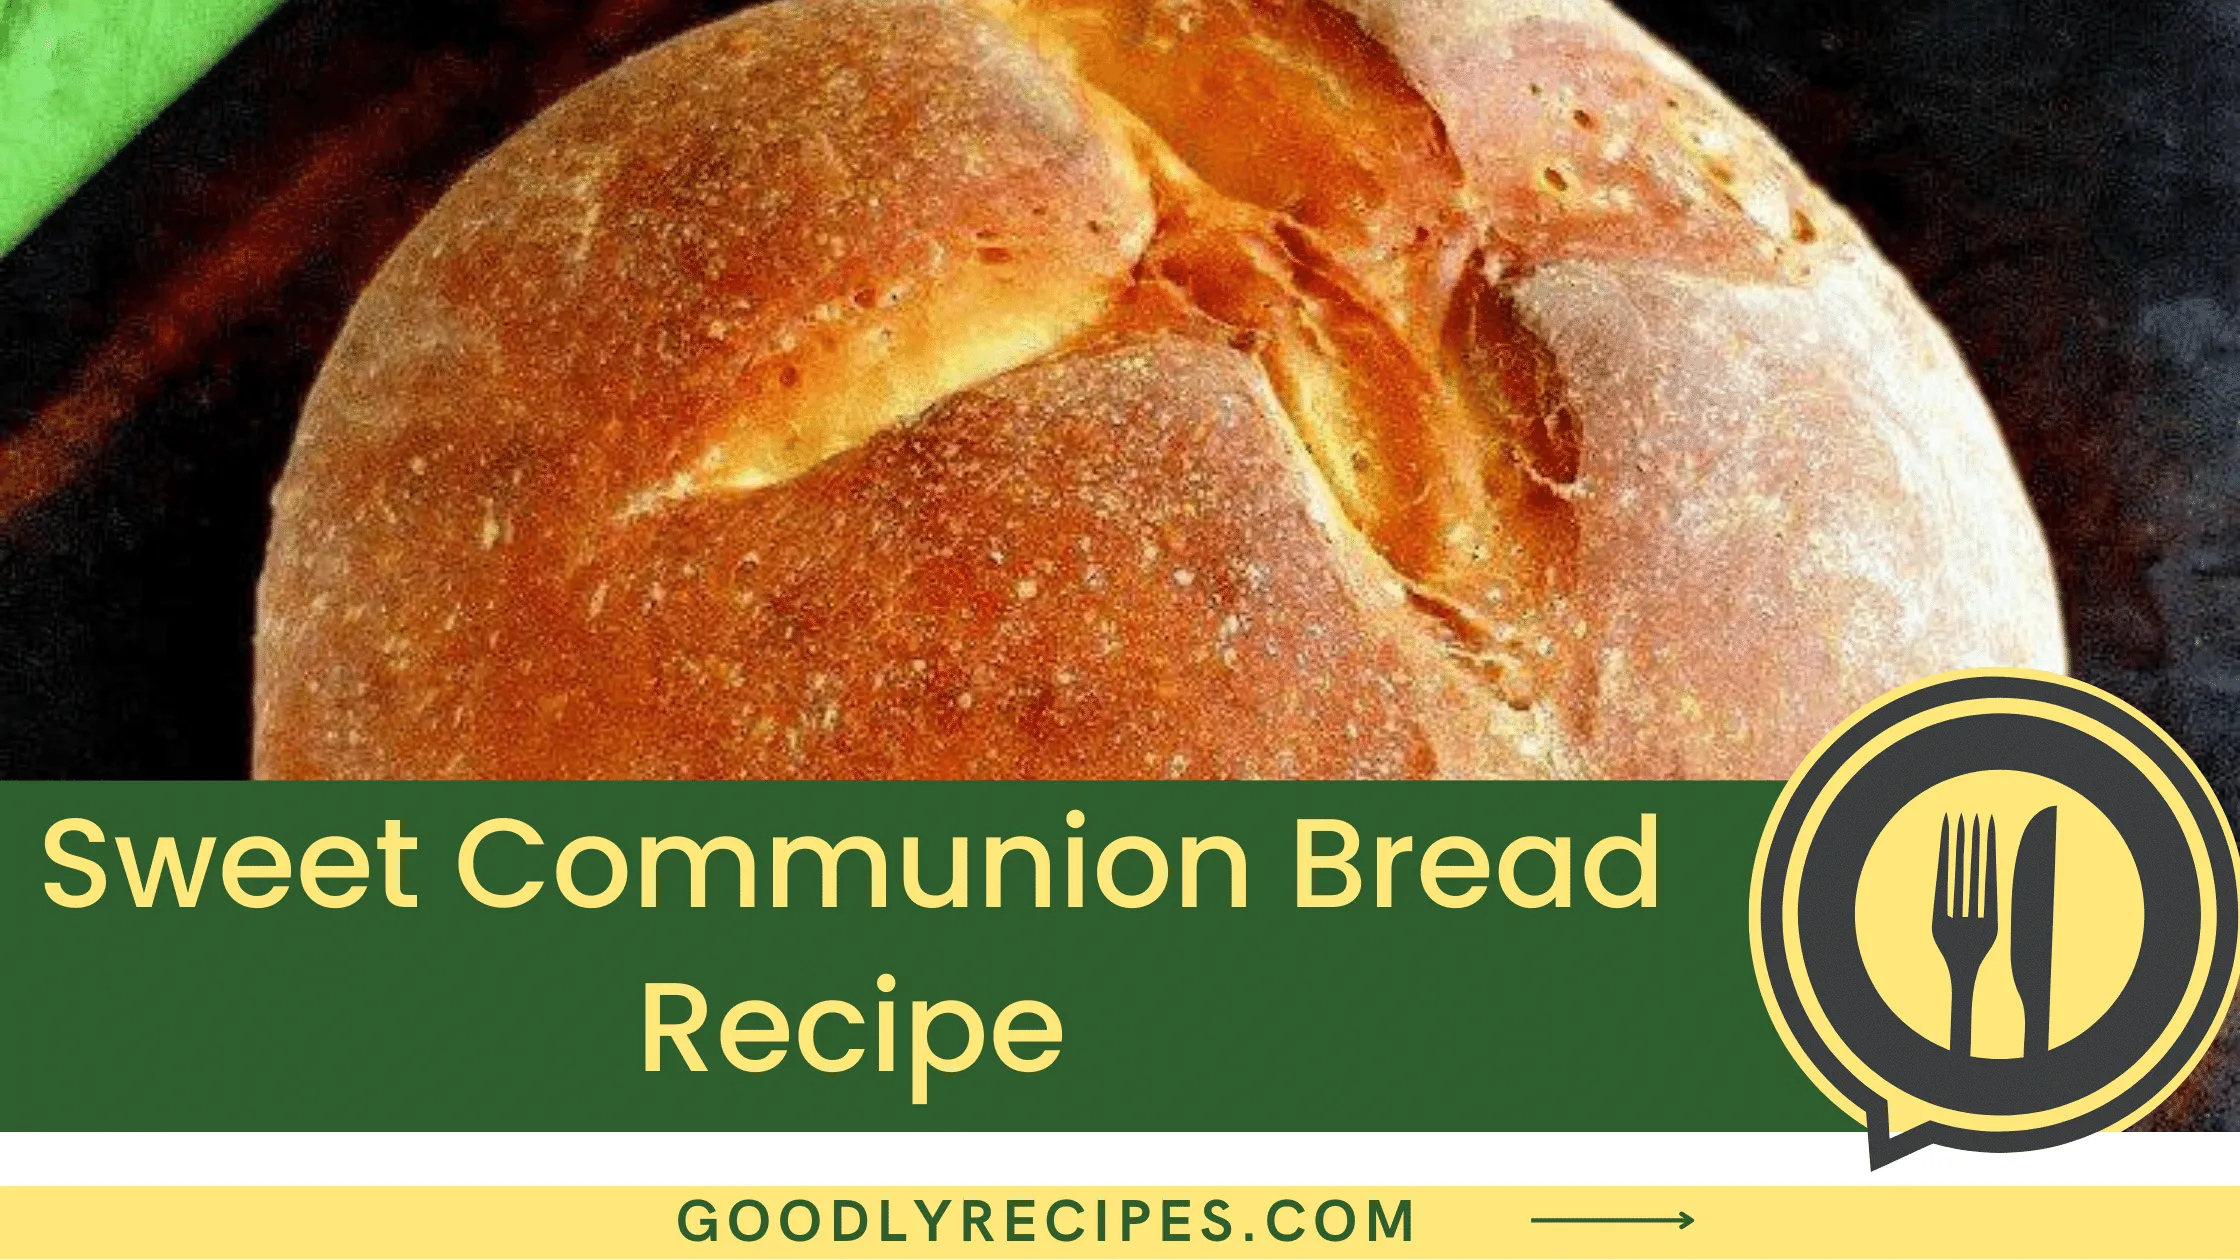 Sweet Communion Bread Recipe - For Food Lovers